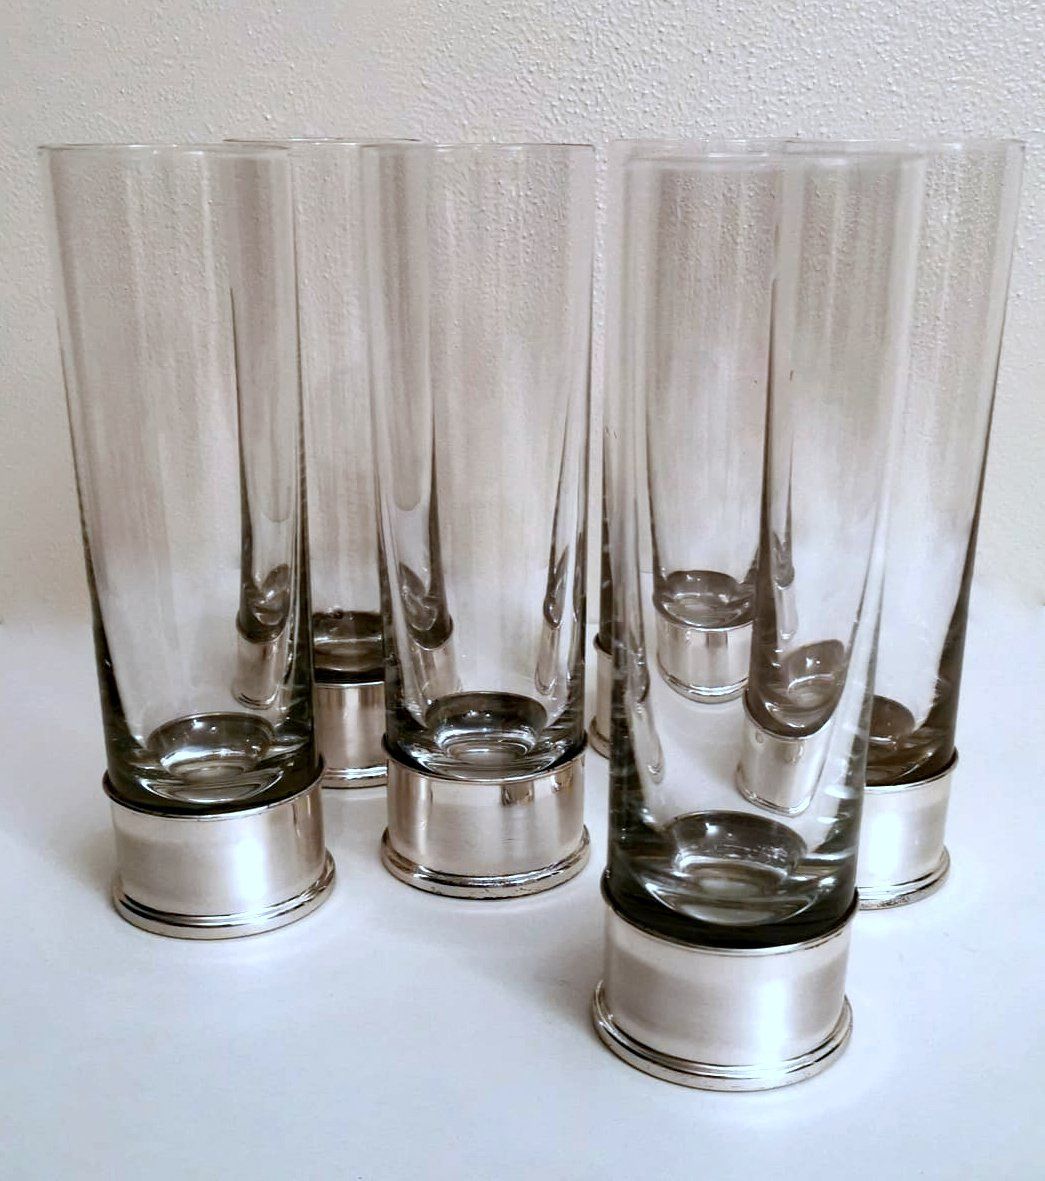 https://artorigo.com/ao_products/48826/l/decorative-objects-glasses-1980-1989-mid-century-modern-argenterie-cecconi-valerio-bazaar-sas-furniture-369112.jpg